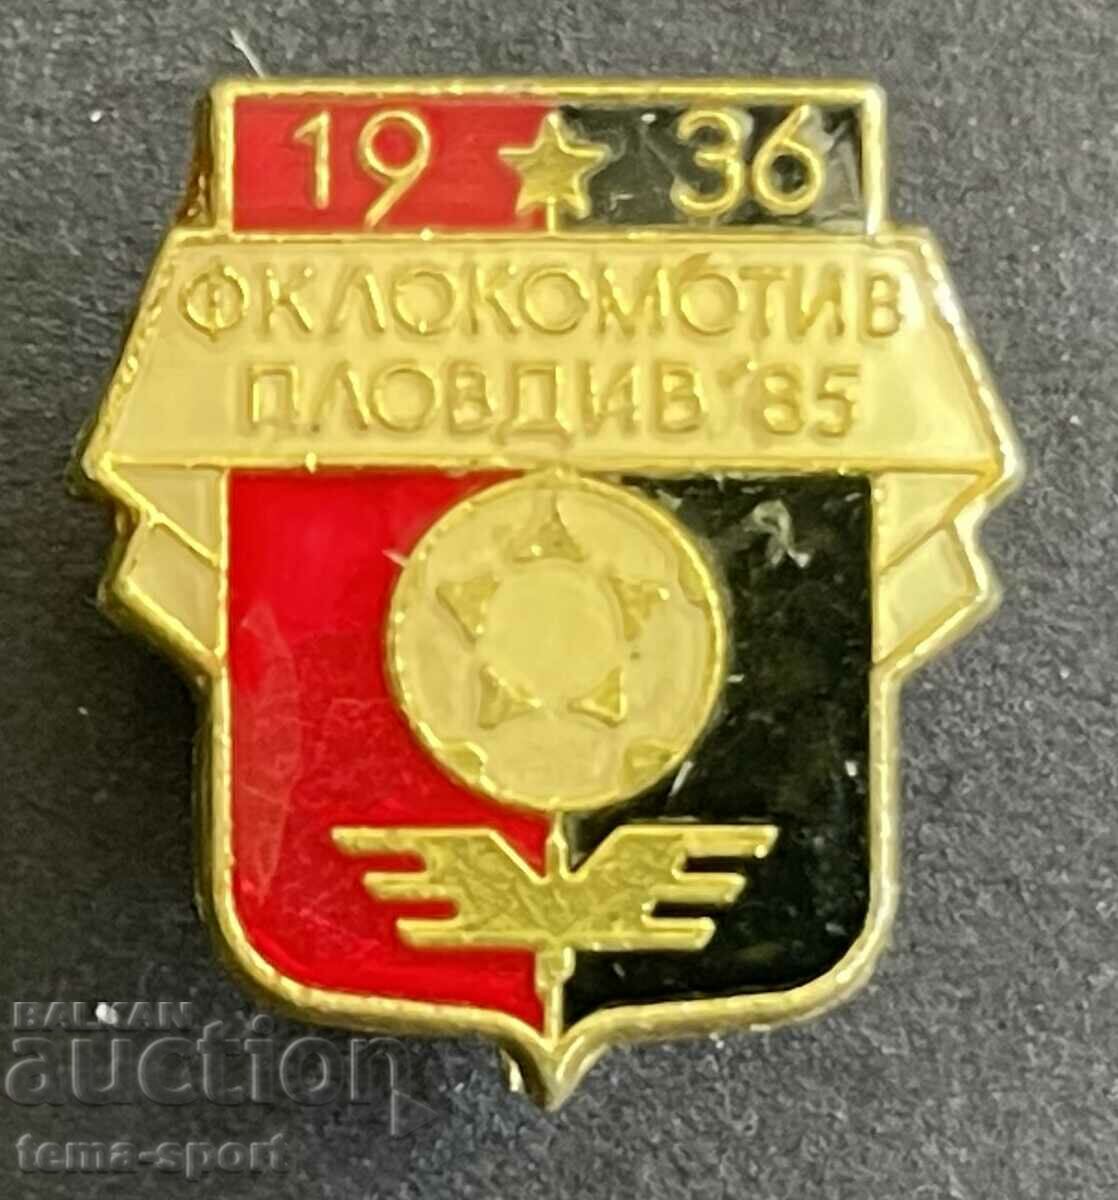 214 България знак футболен клуб Локомотив Пловдив 1985г.